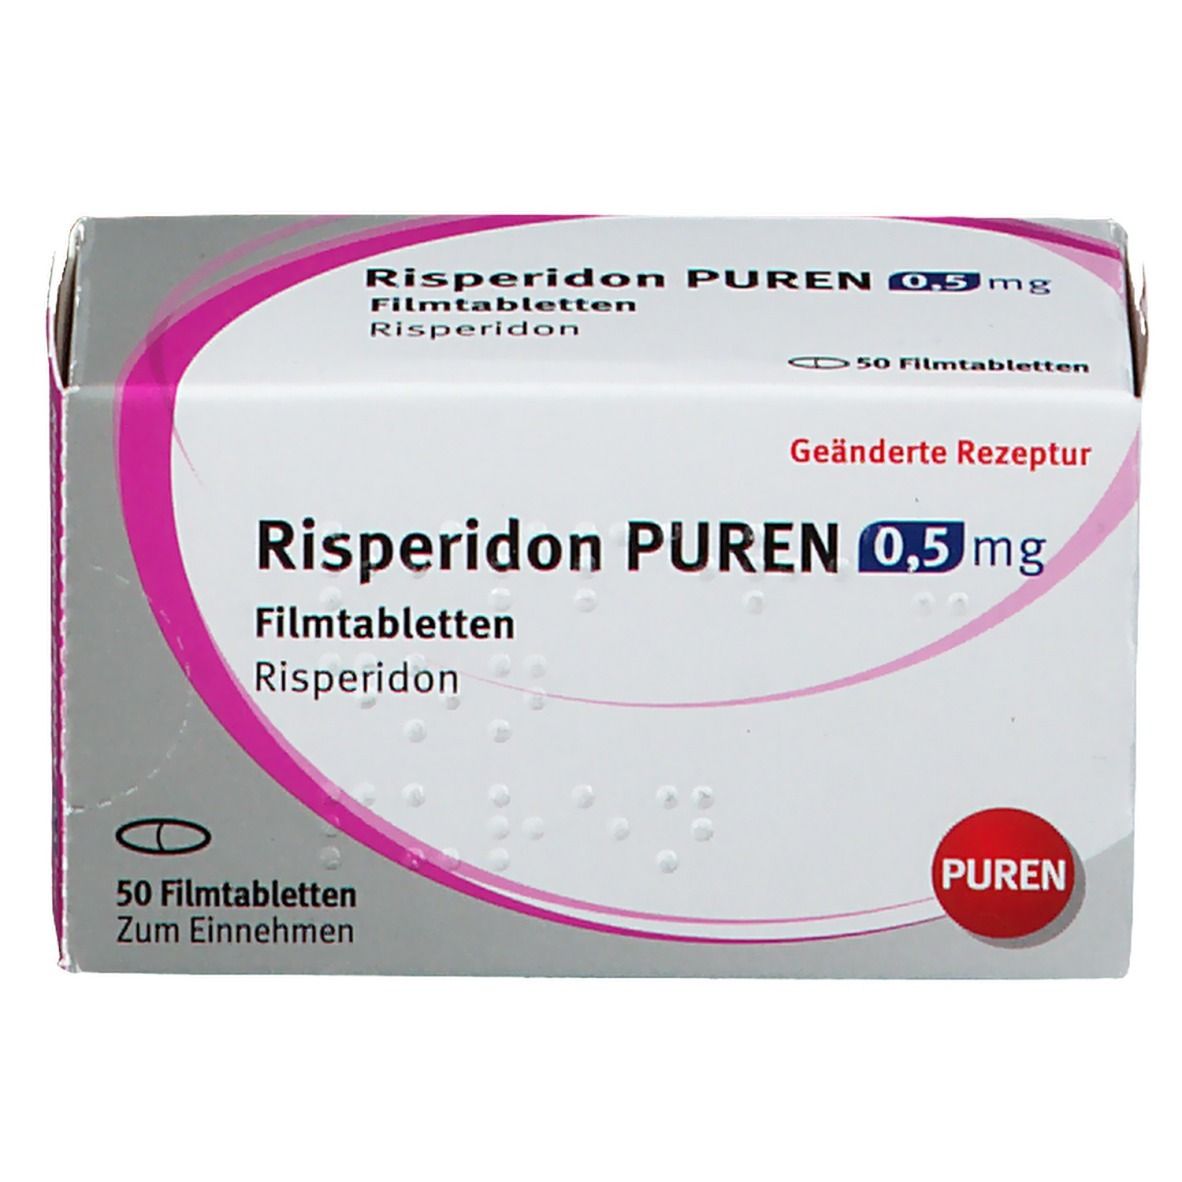 Risperidon PUREN 0,5 mg